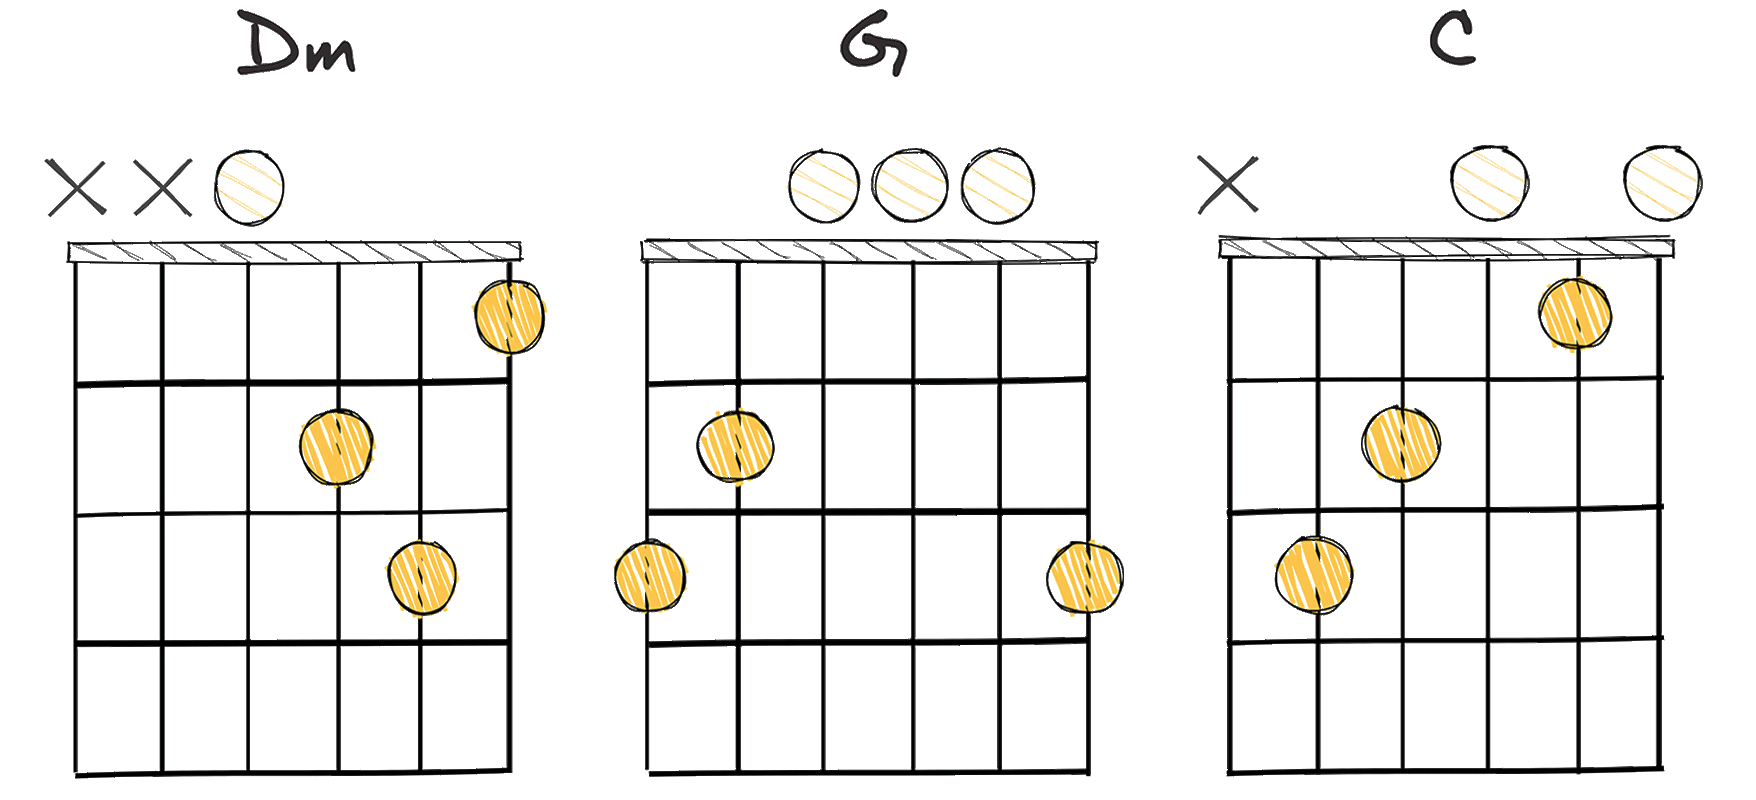 II - V - I (2 - 5 - 1) chords diagram